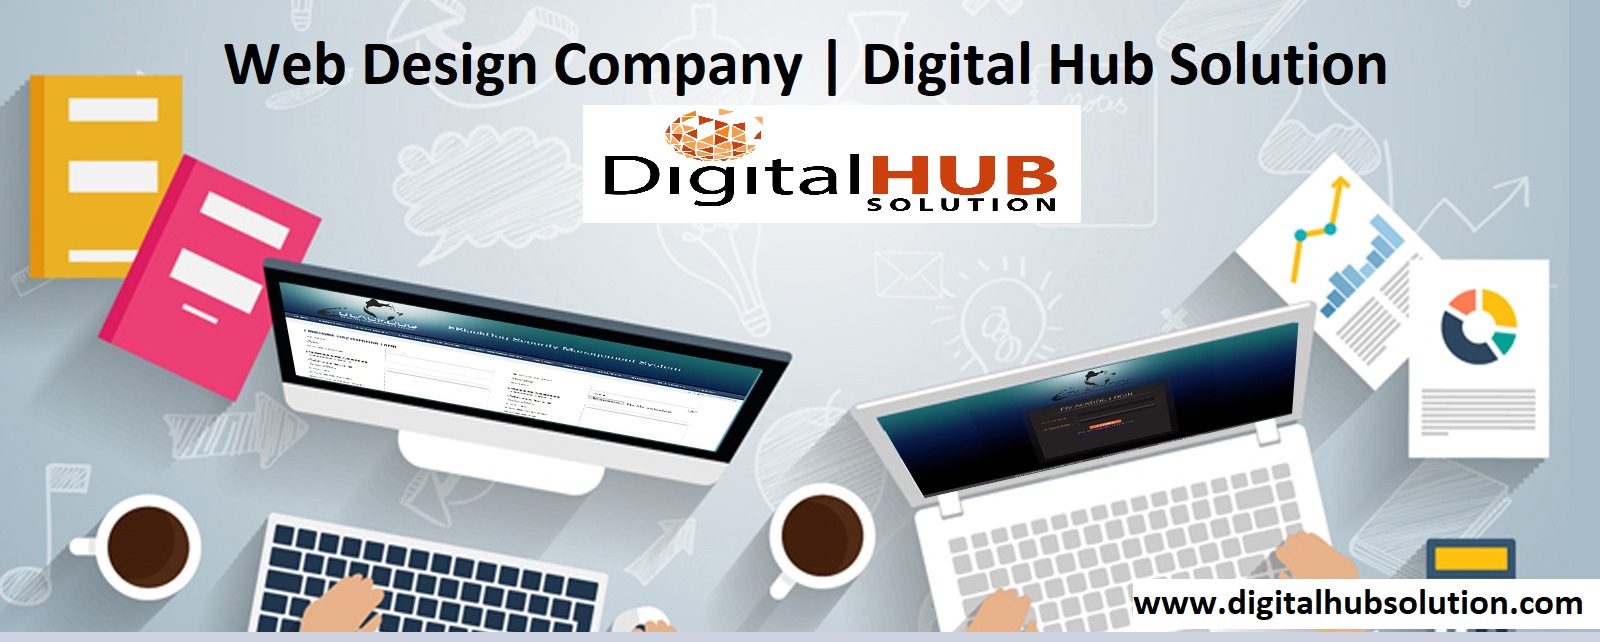 web design company digital hub solution 1